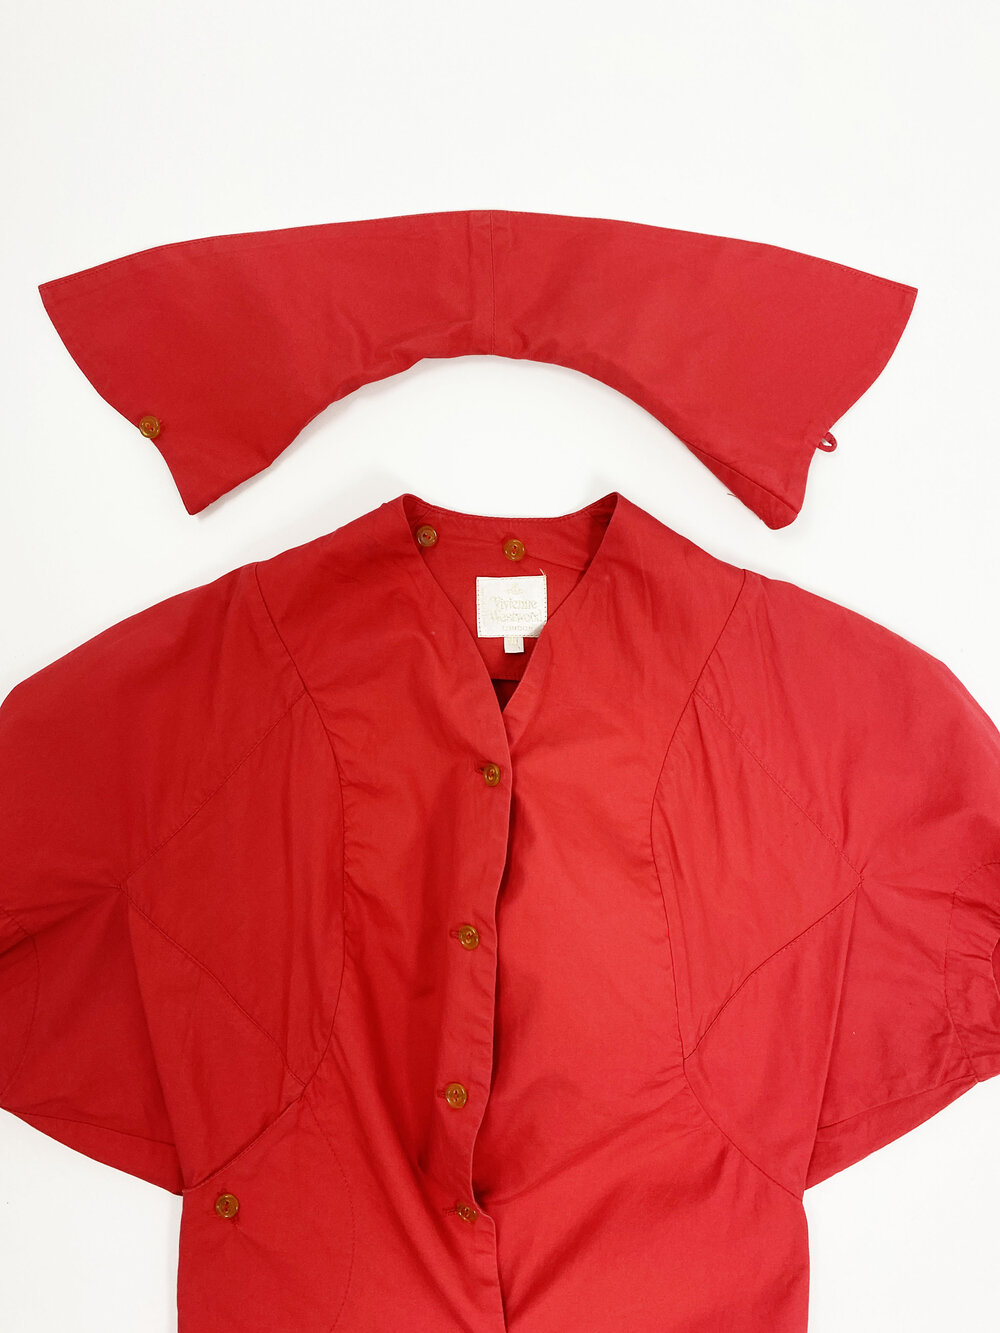 Vivienne Westwood 90s red shirt — JAMES VELORIA